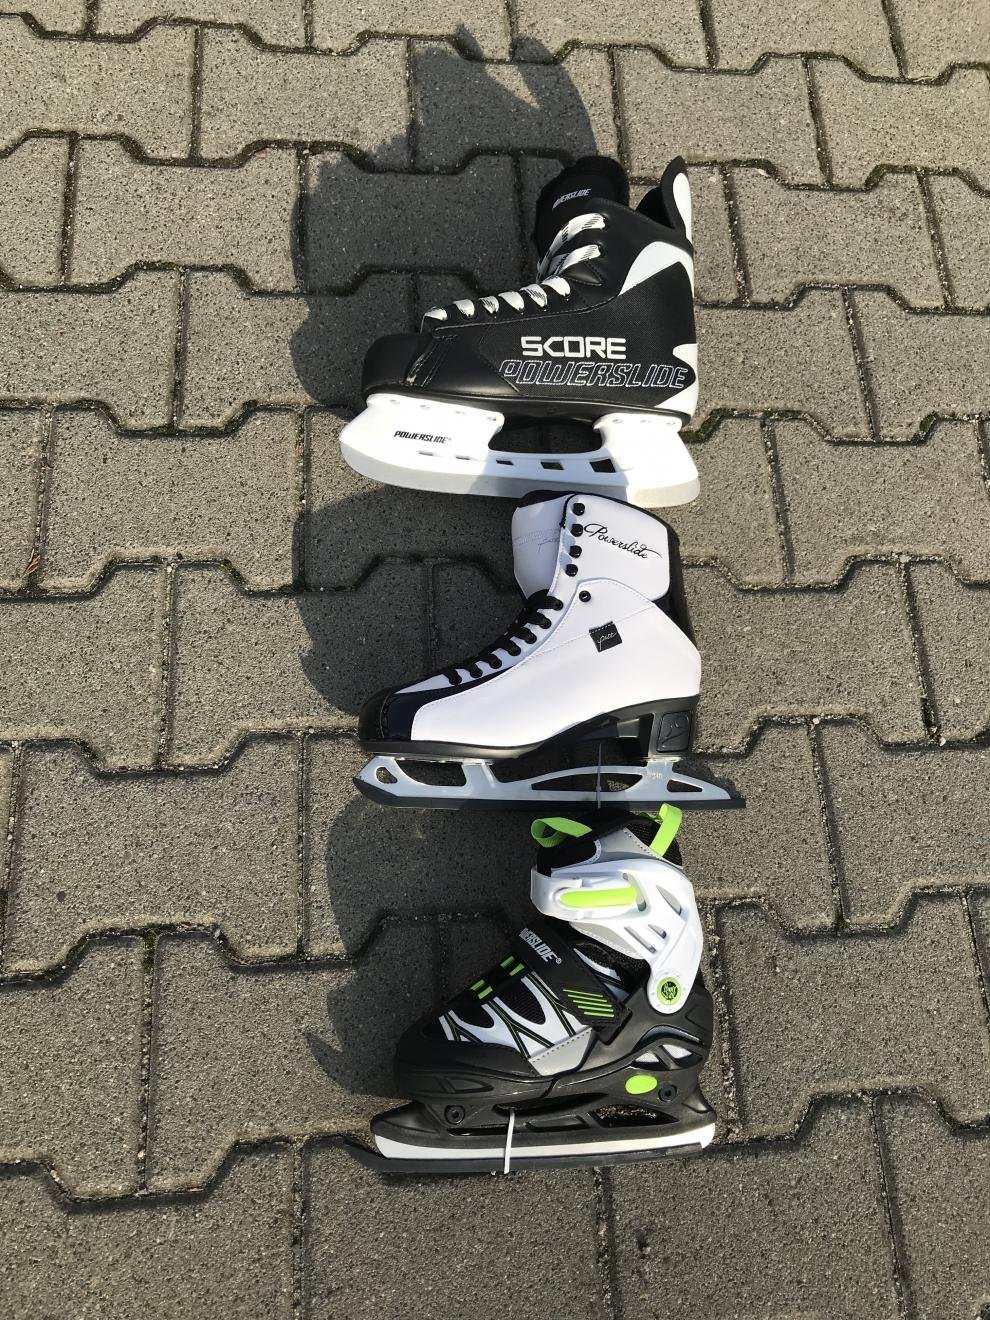 Cheap Ex-Display Ice Skates